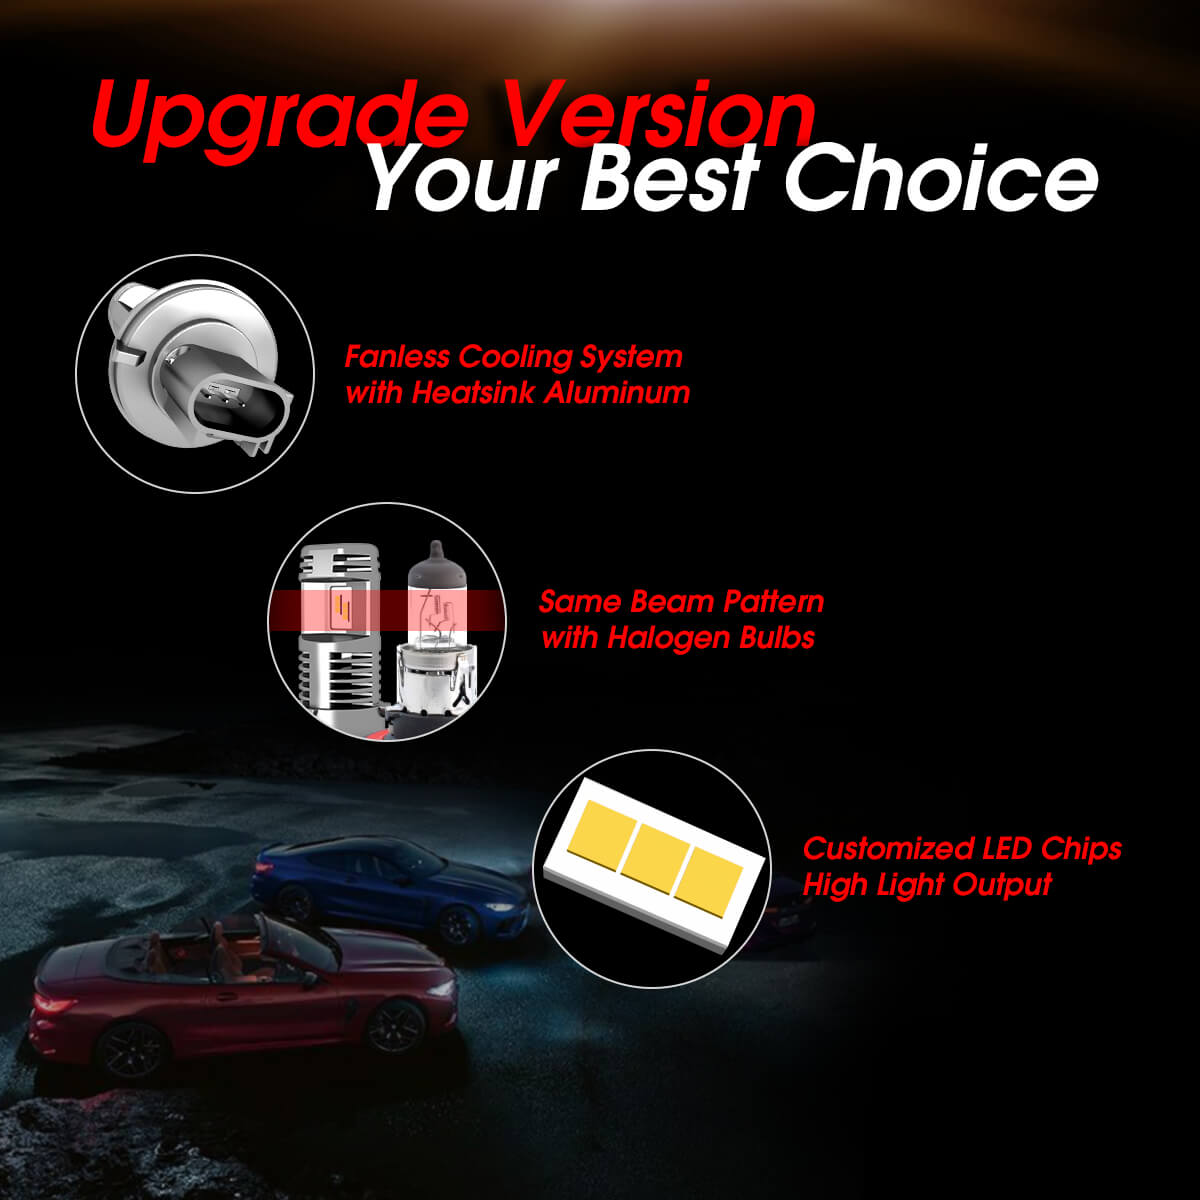 9004 LED Fanless Headlight/Fog Light Conversion Kit with Internal Drivers -  4,000 Lumens/Set